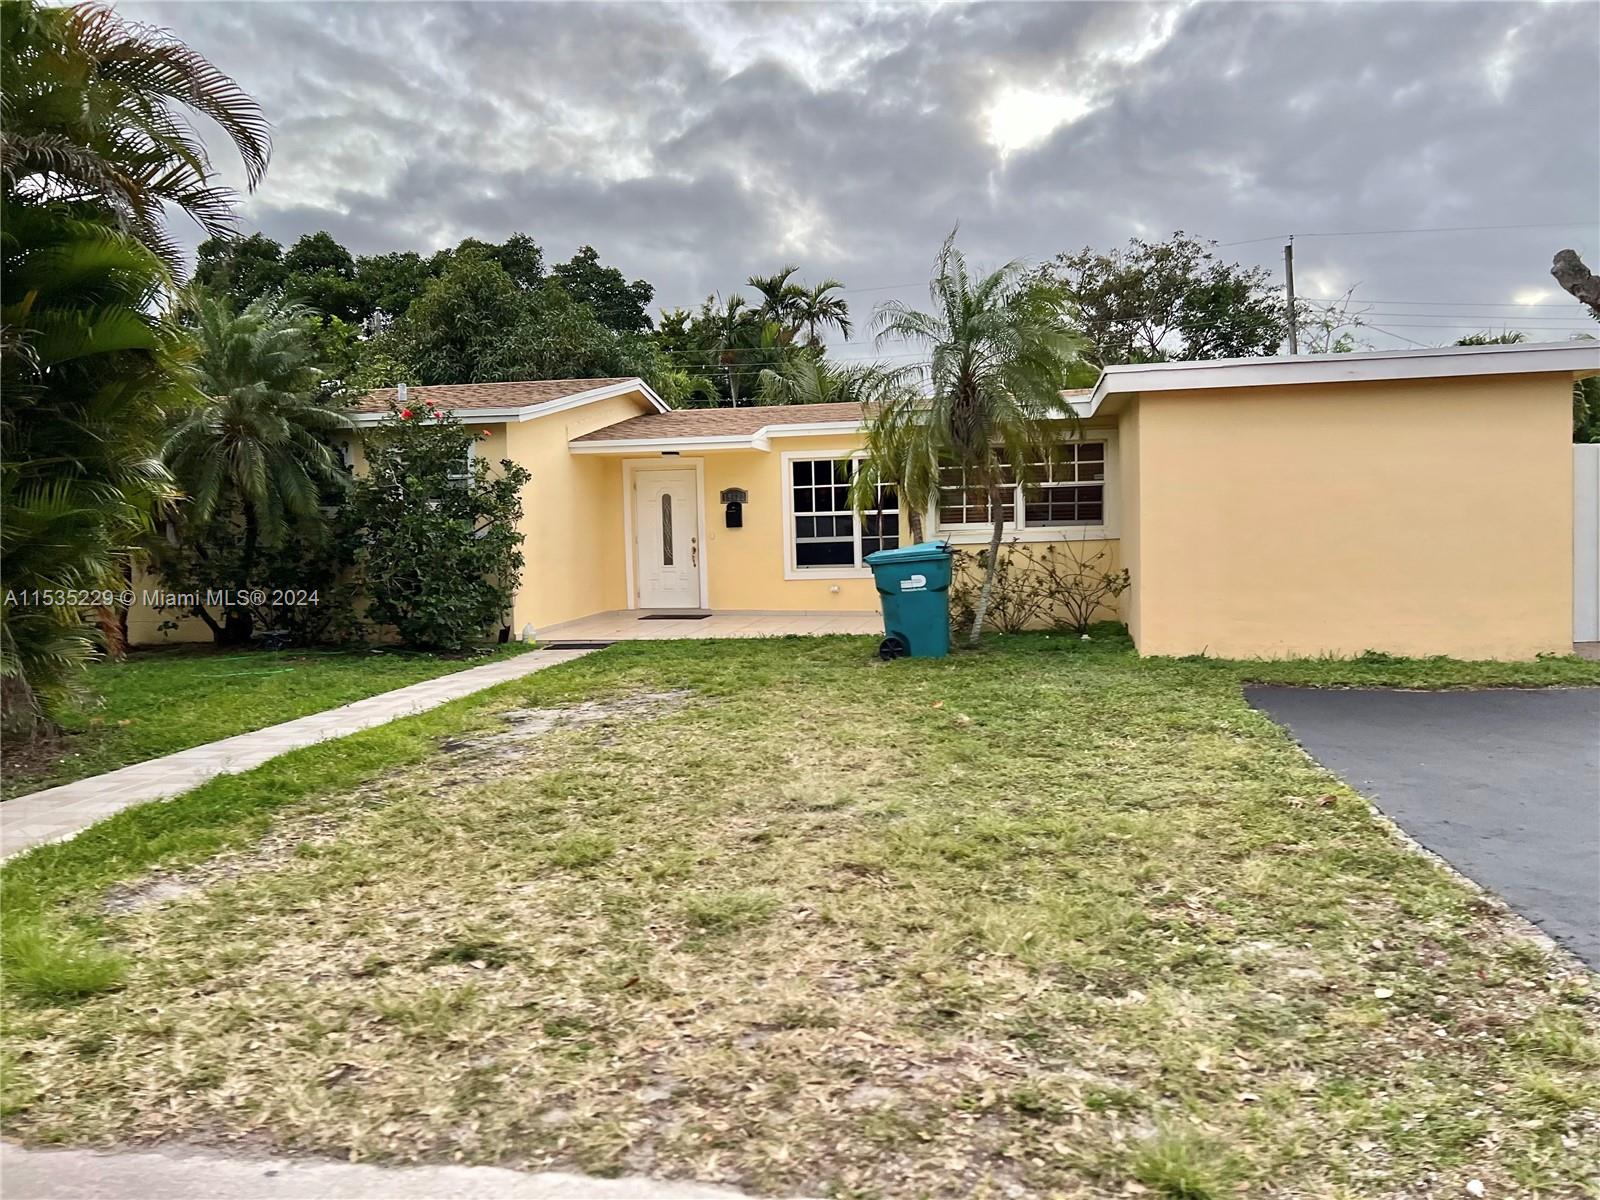 Property for Sale at 19622 Ne 12th Pl Pl, Miami, Broward County, Florida - Bedrooms: 3 
Bathrooms: 2  - $545,000